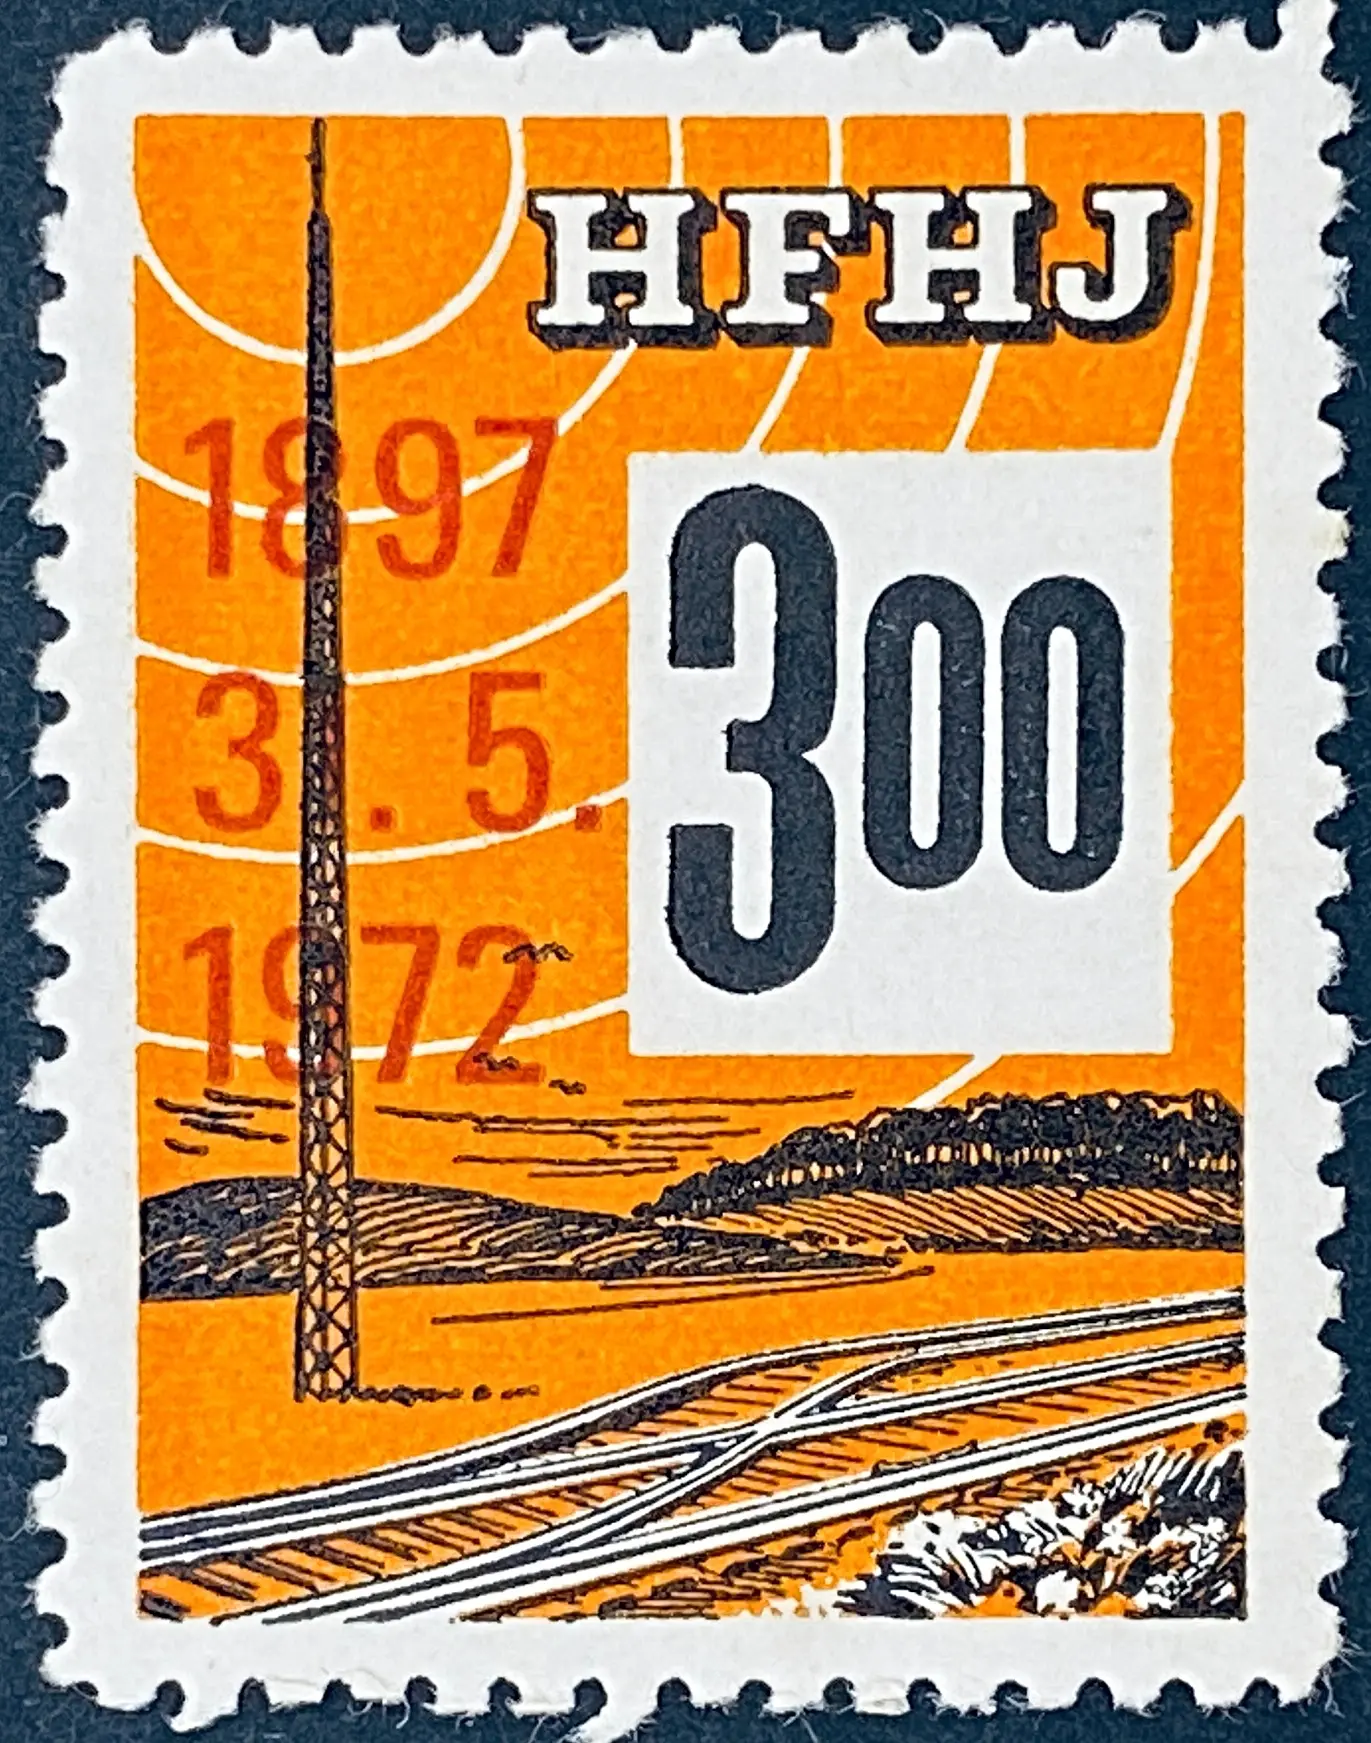 HFHJ 155 - 3<sup>00</sup> Kroner Motiv: Radiomast - Orange.